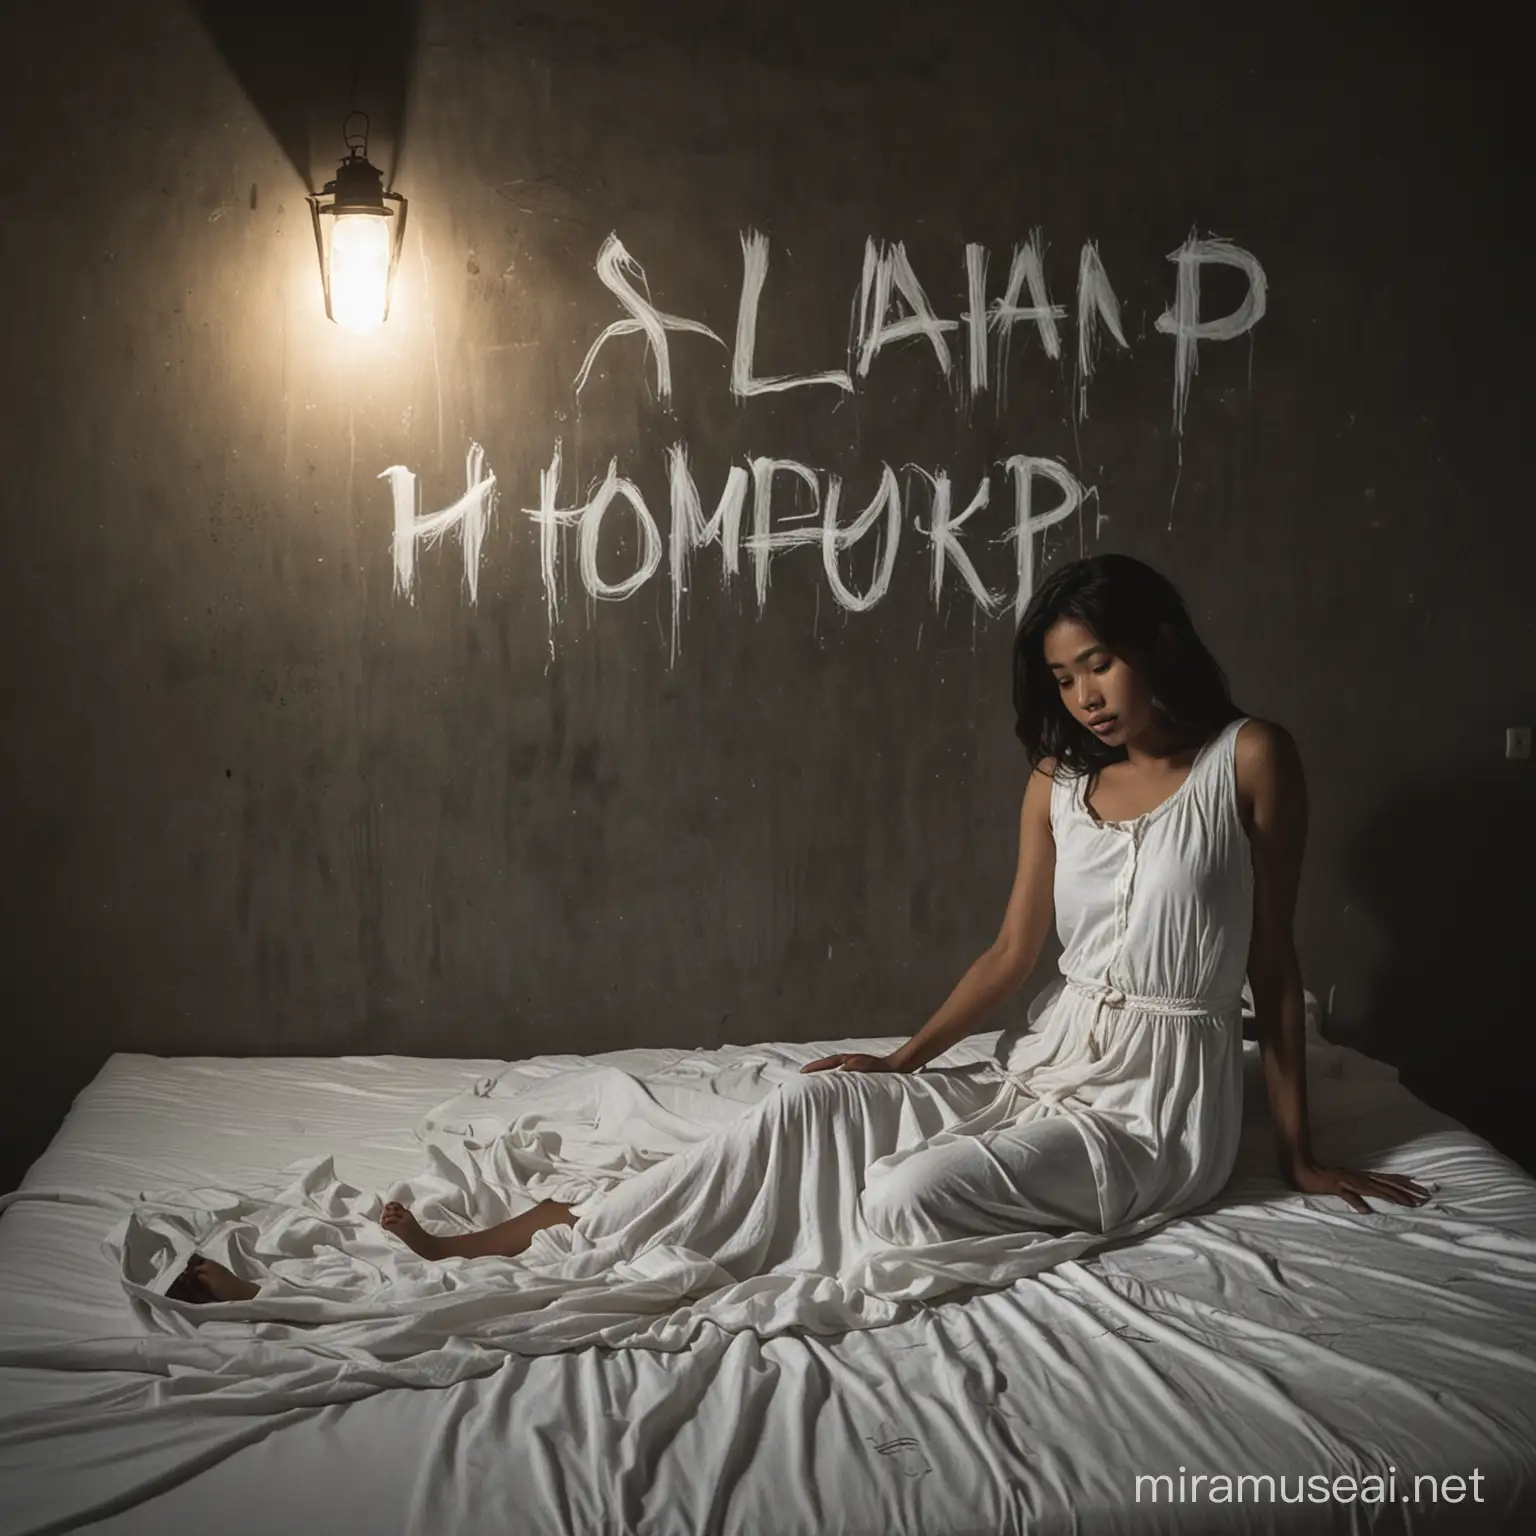 Indonesian Man Sleeping in Dark Room with Haunted Presence